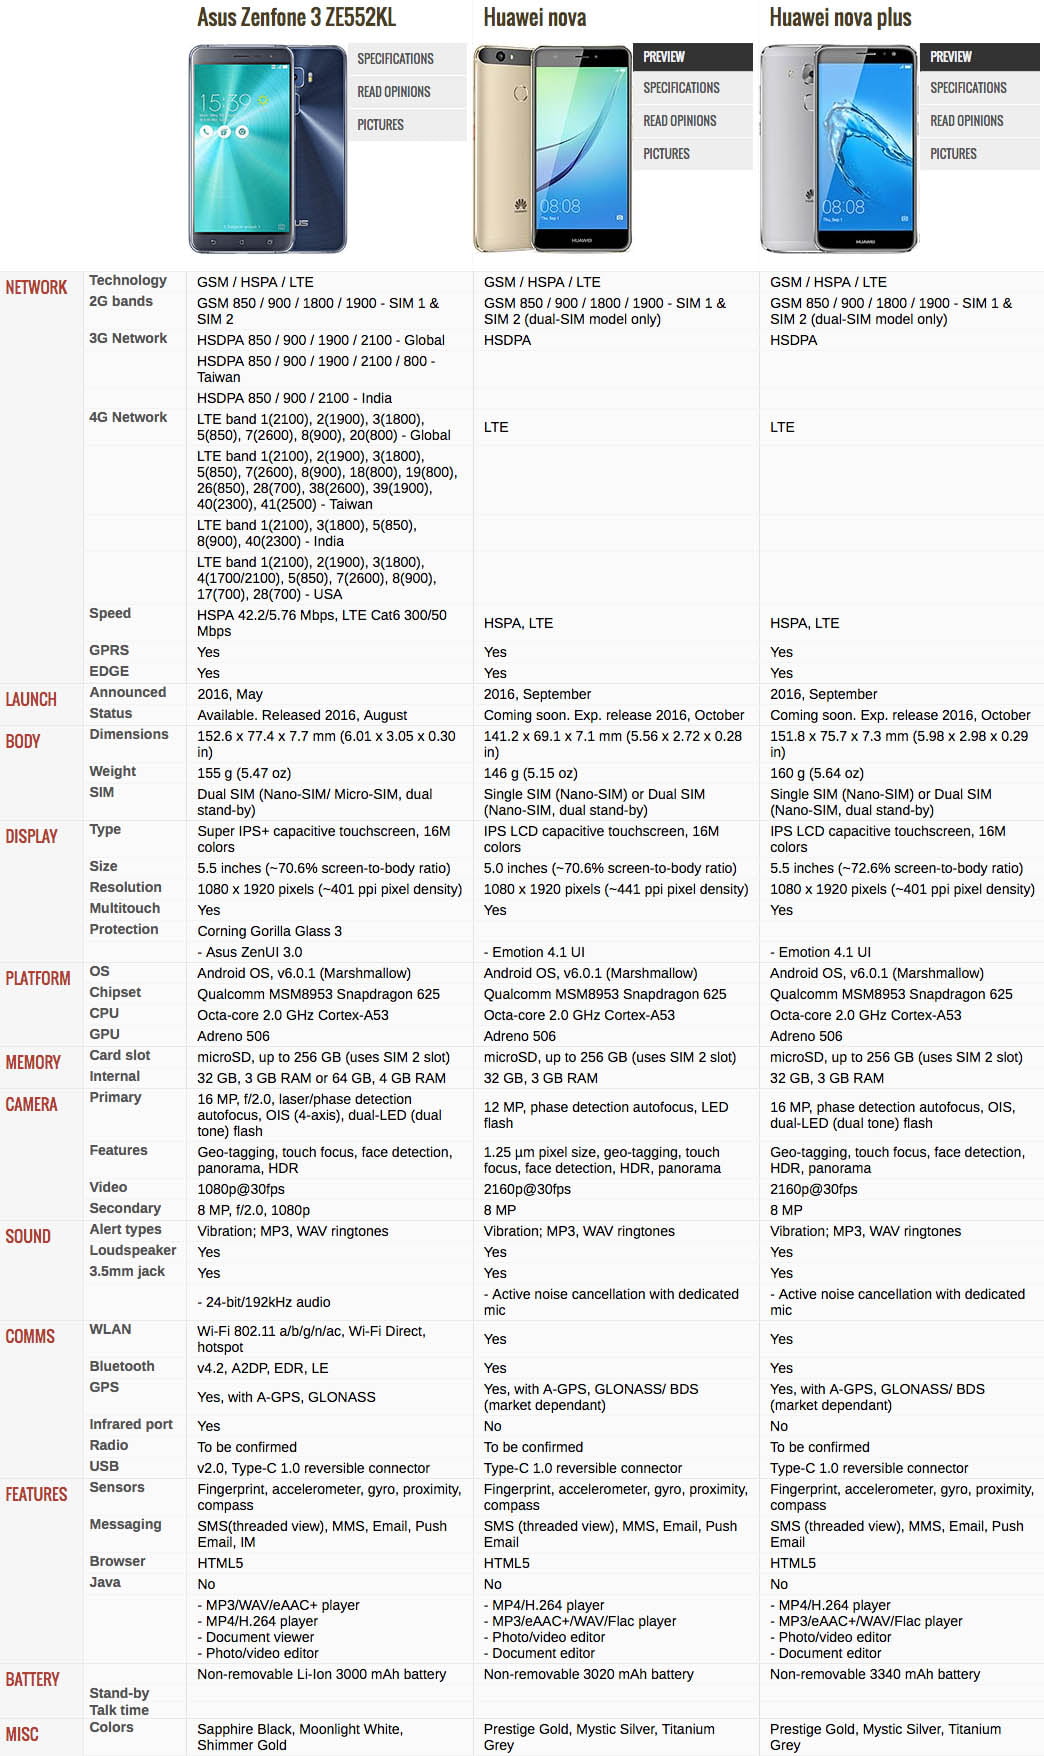 Specs comparison: ASUS Zenfone 3 (ZE552KL) vs. Huawei Nova vs. Huawei Nova Plus